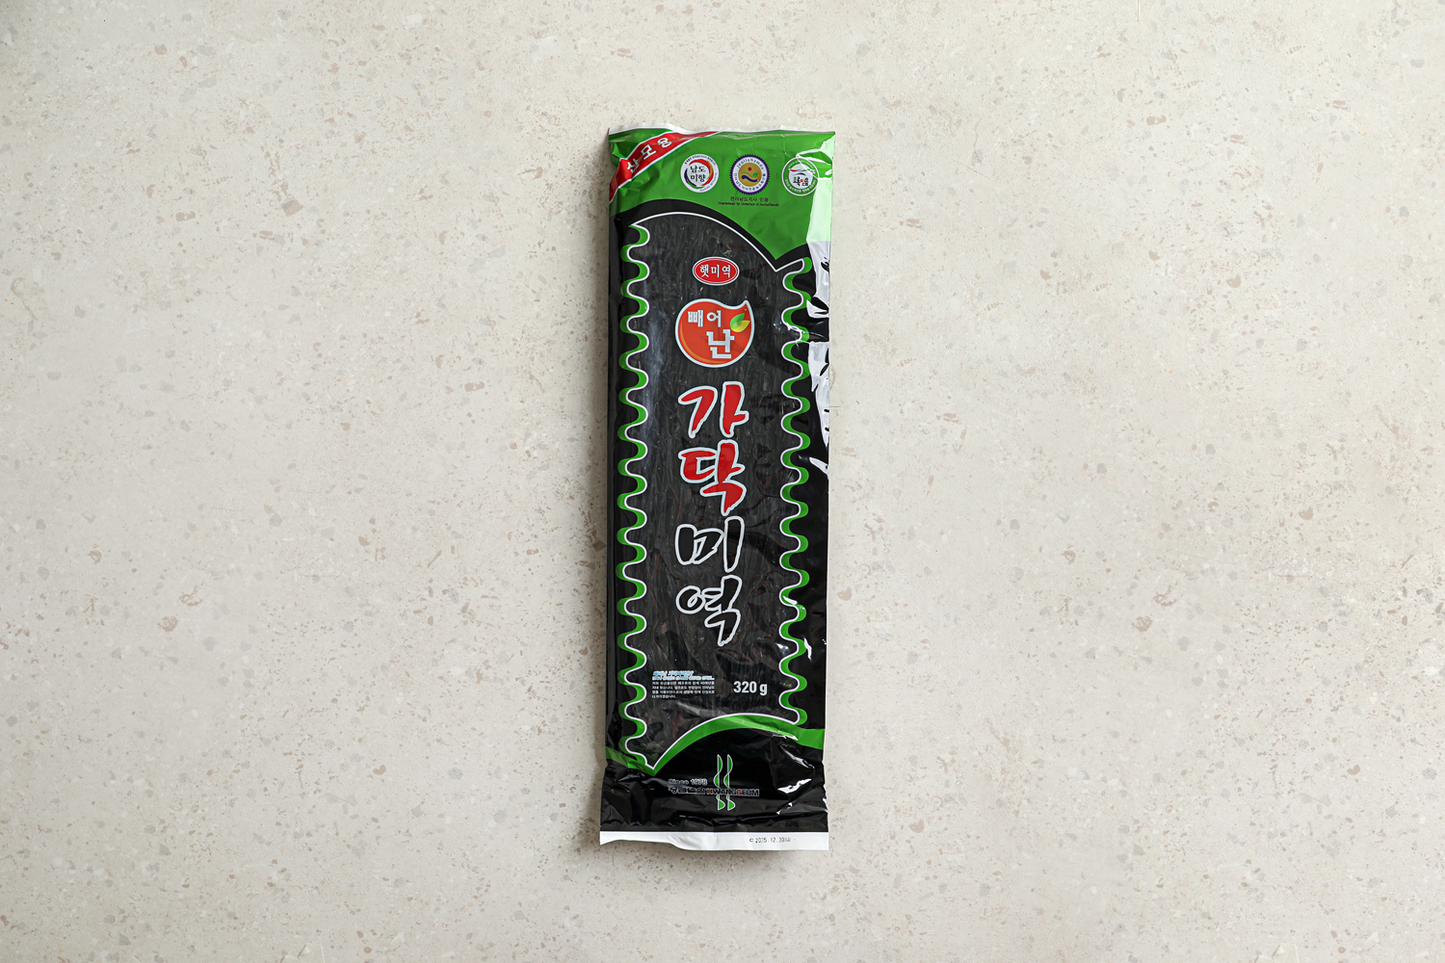 Hwangummulsan Splendid Seaweed 320g